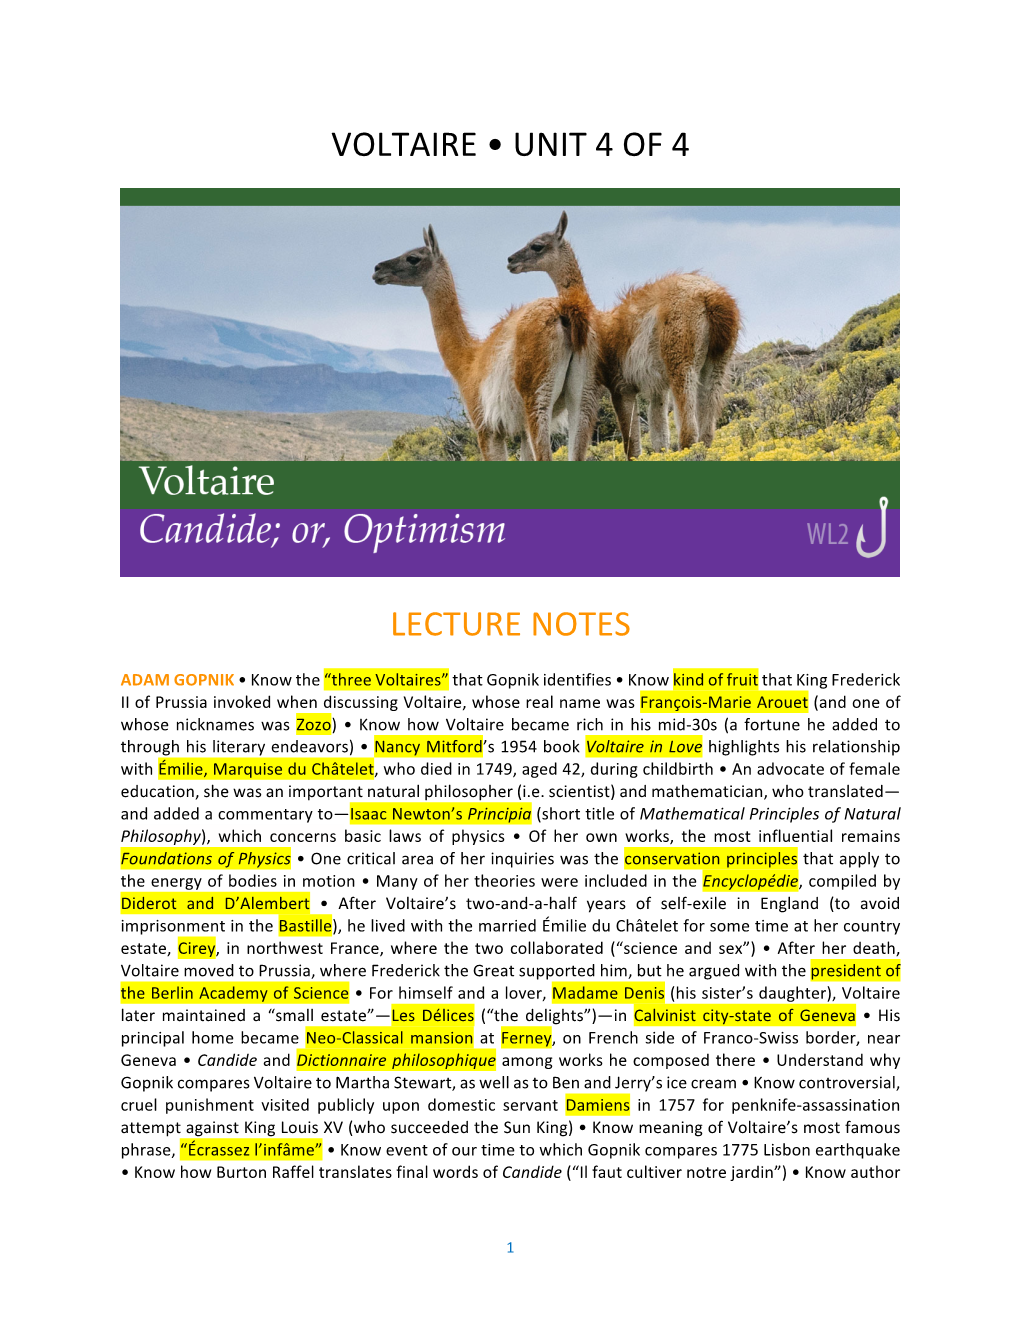 Voltaire • Unit 4 of 4 Lecture Notes